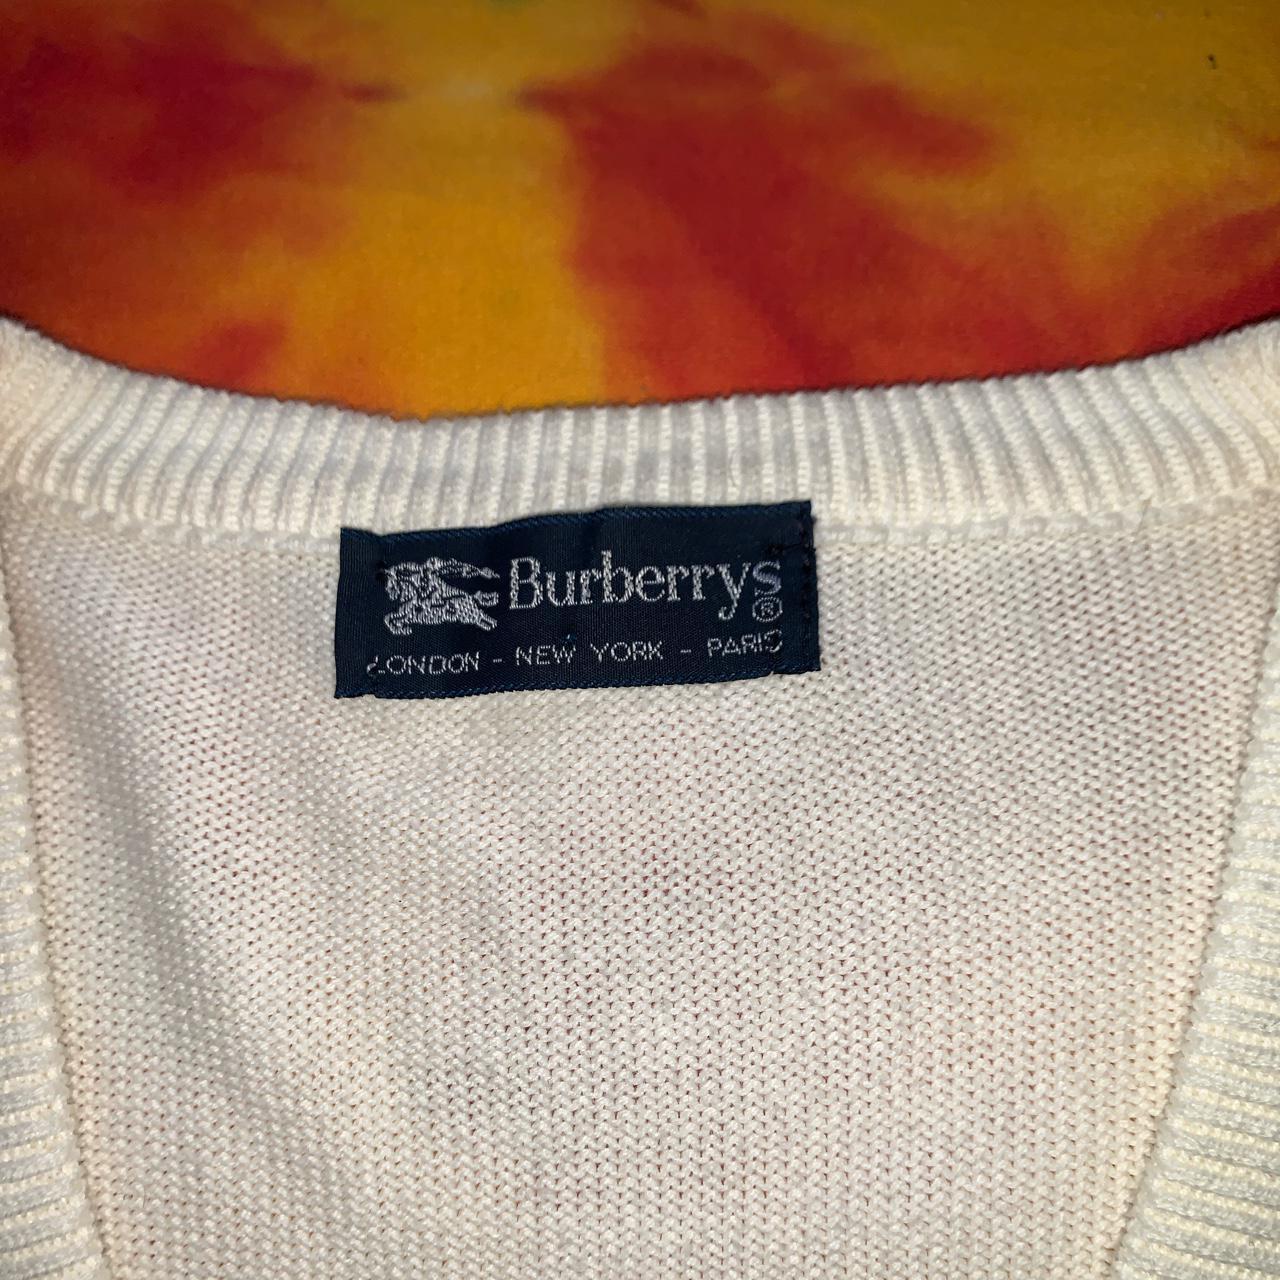 Rare Vintage Burberry v-neck sweater. In great... - Depop